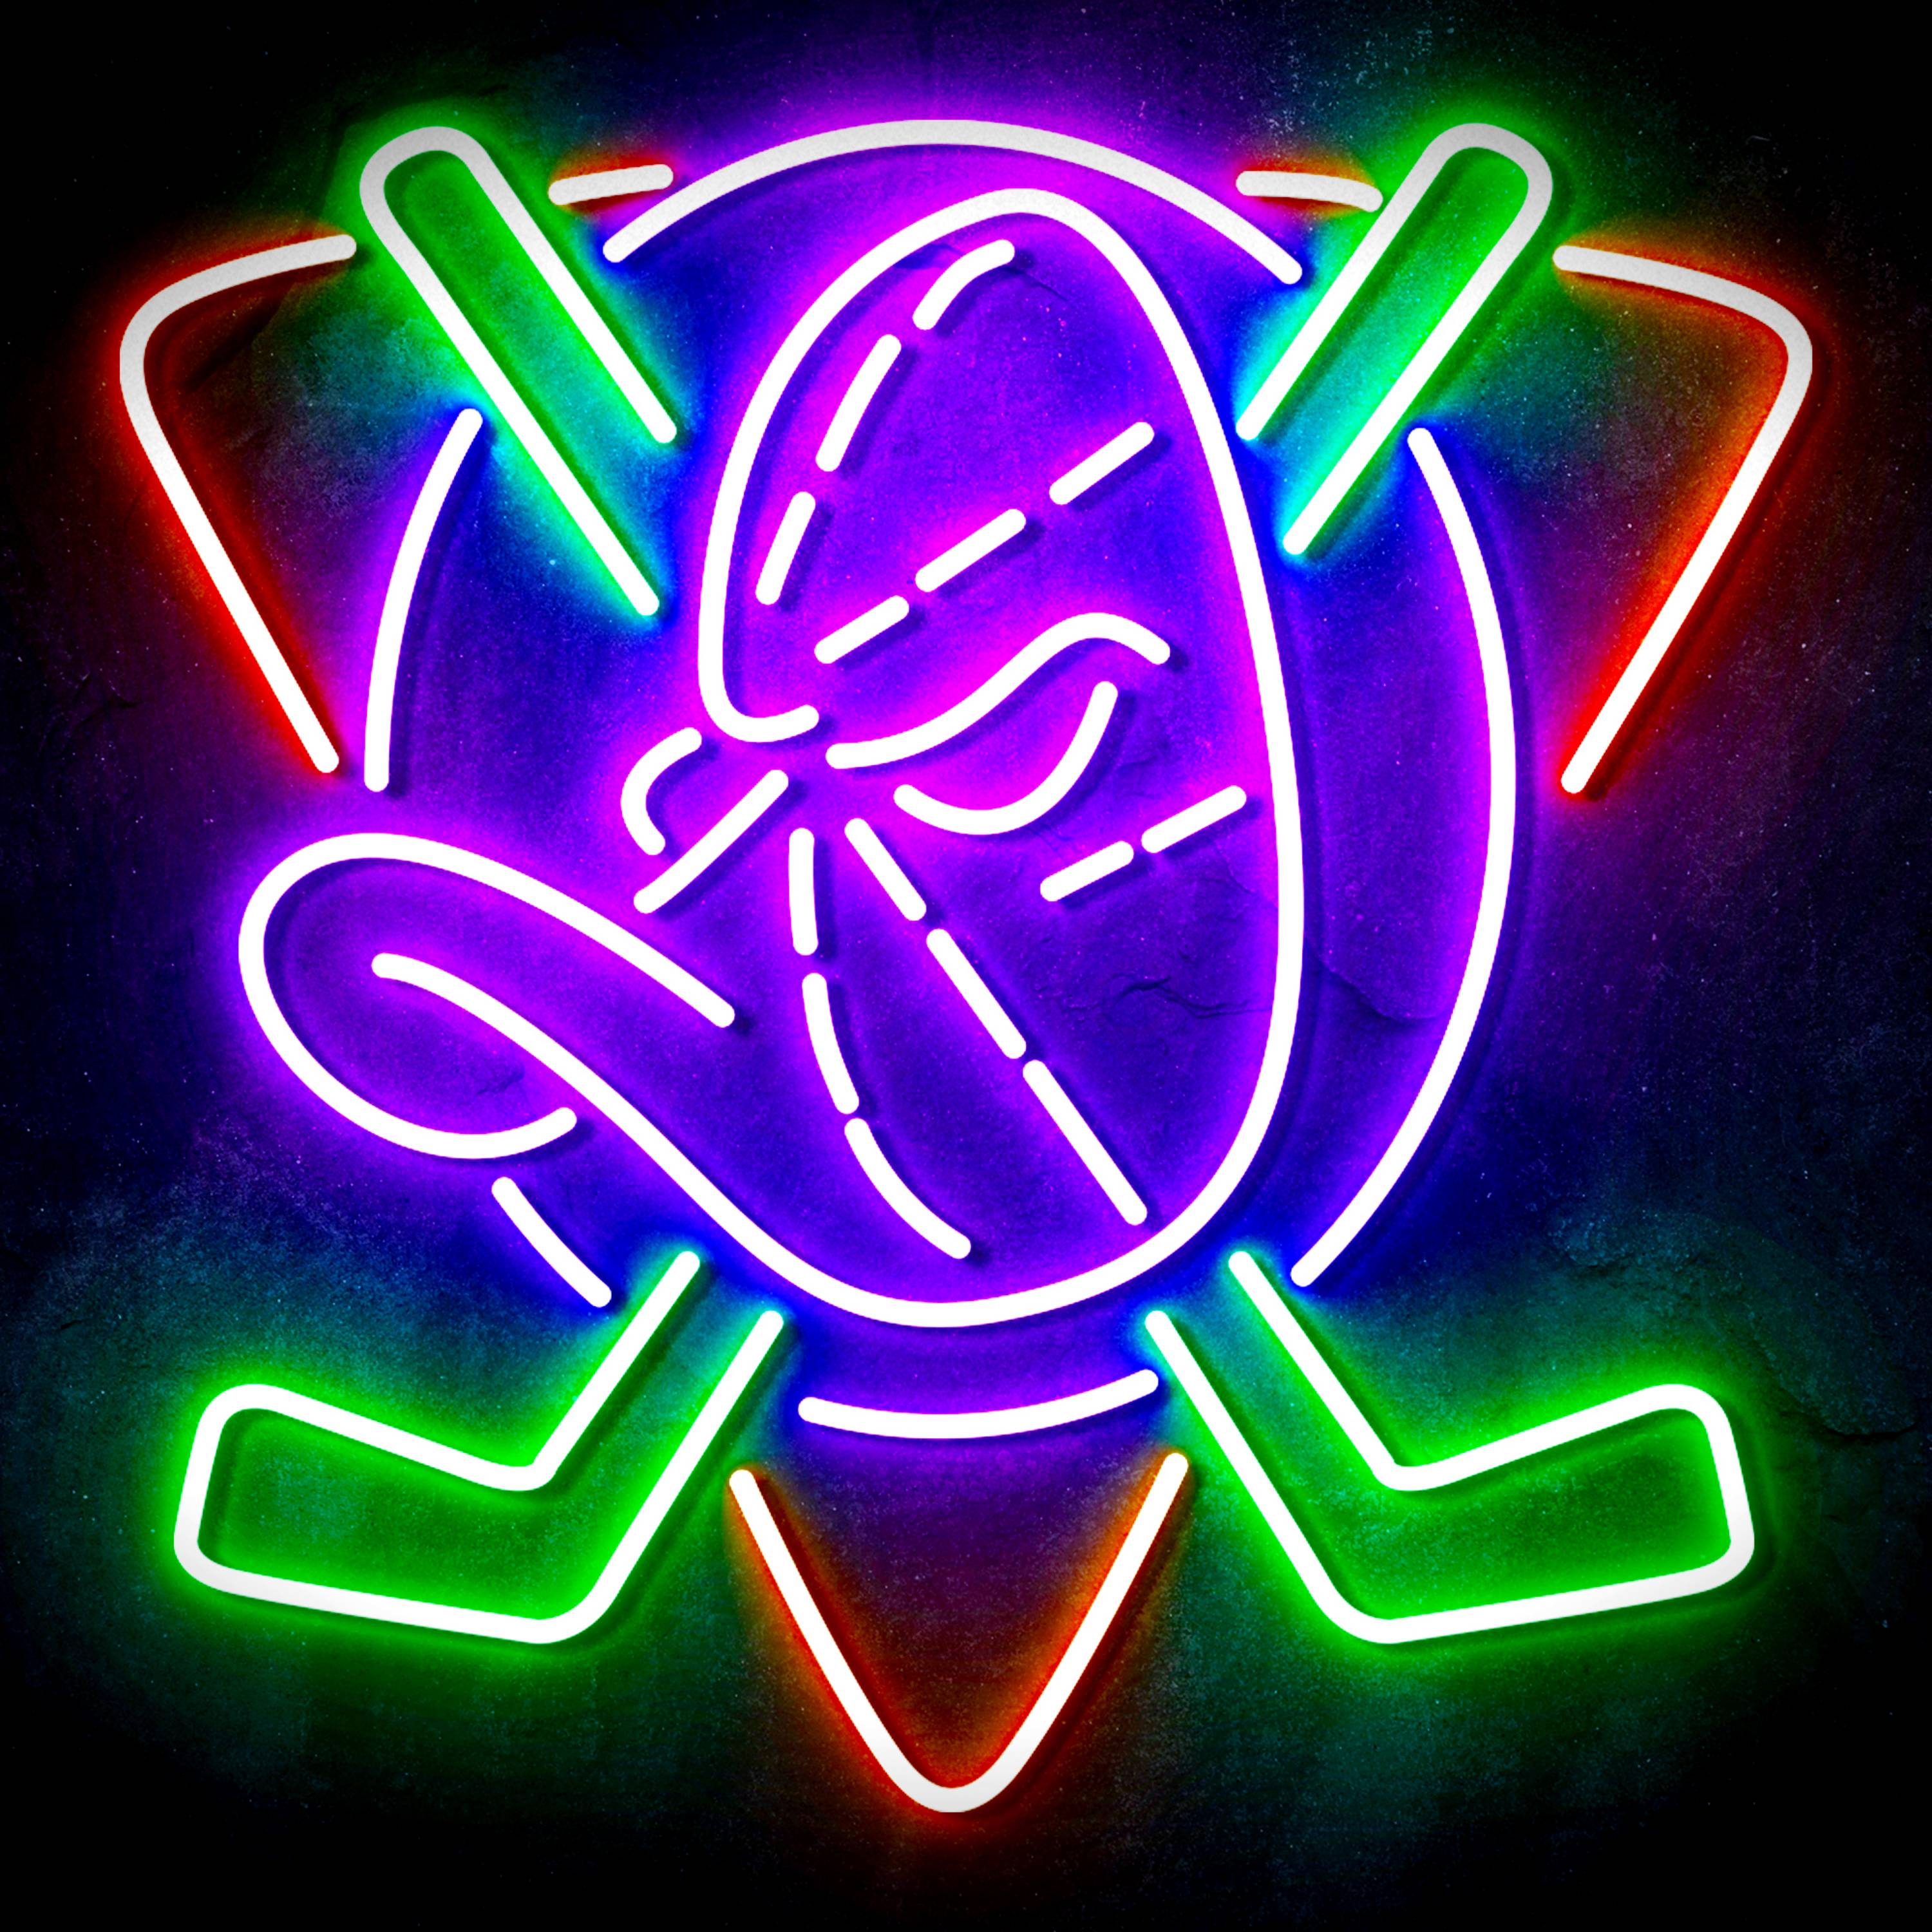 NHL Anaheim Ducks LED Neon Sign